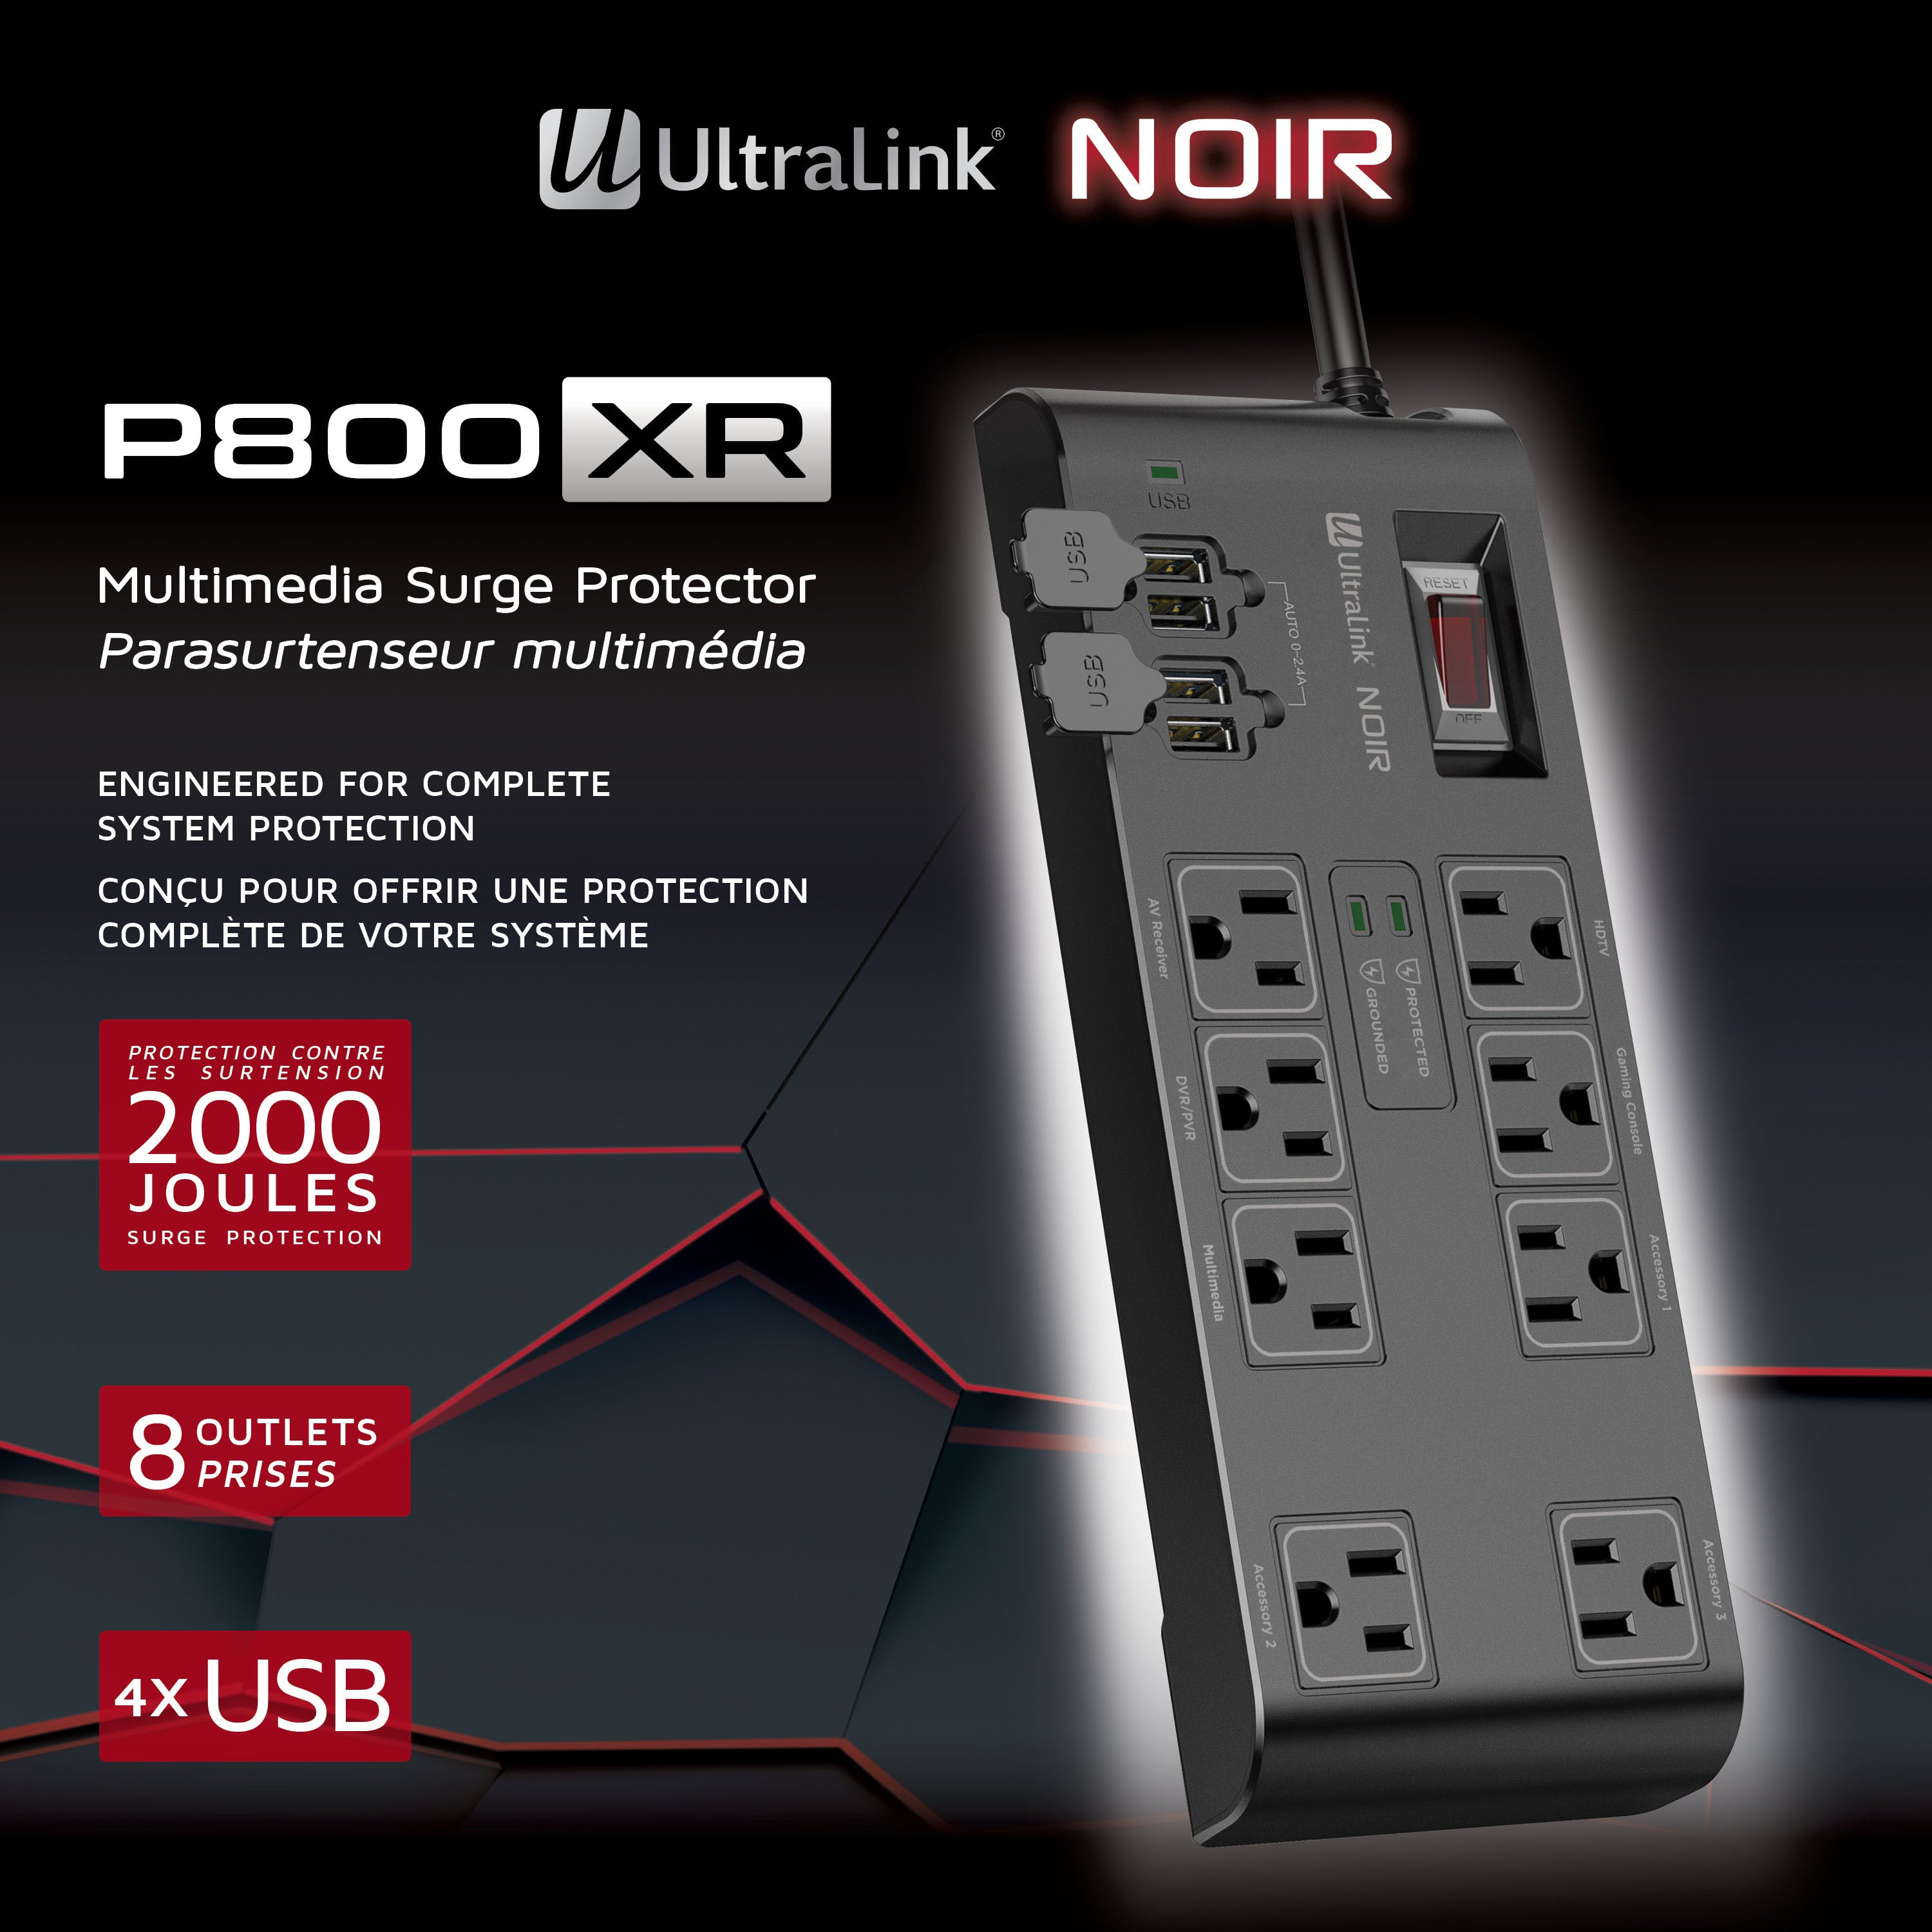 UltraLink Noir: Multimedia Surge Protector - 8 Outlets - 4 USB